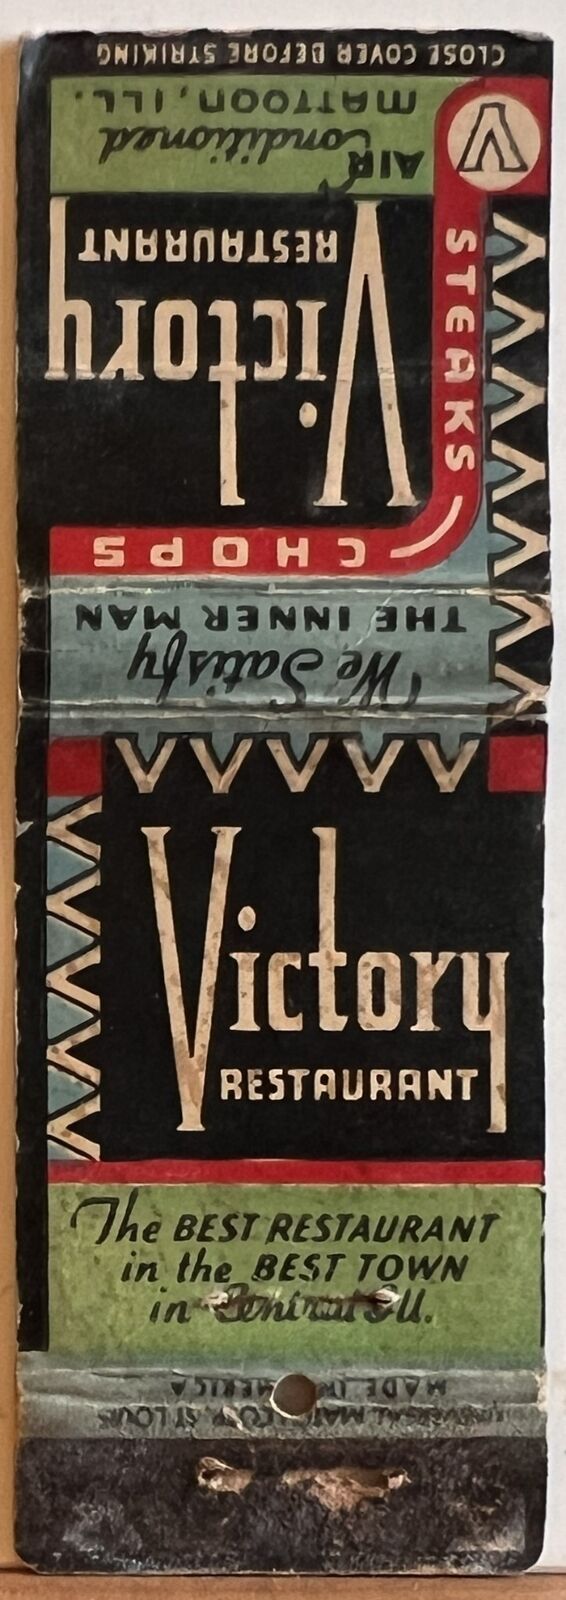 Victory Restaurant Mattoon IL Illinois Vintage Matchbook Cover